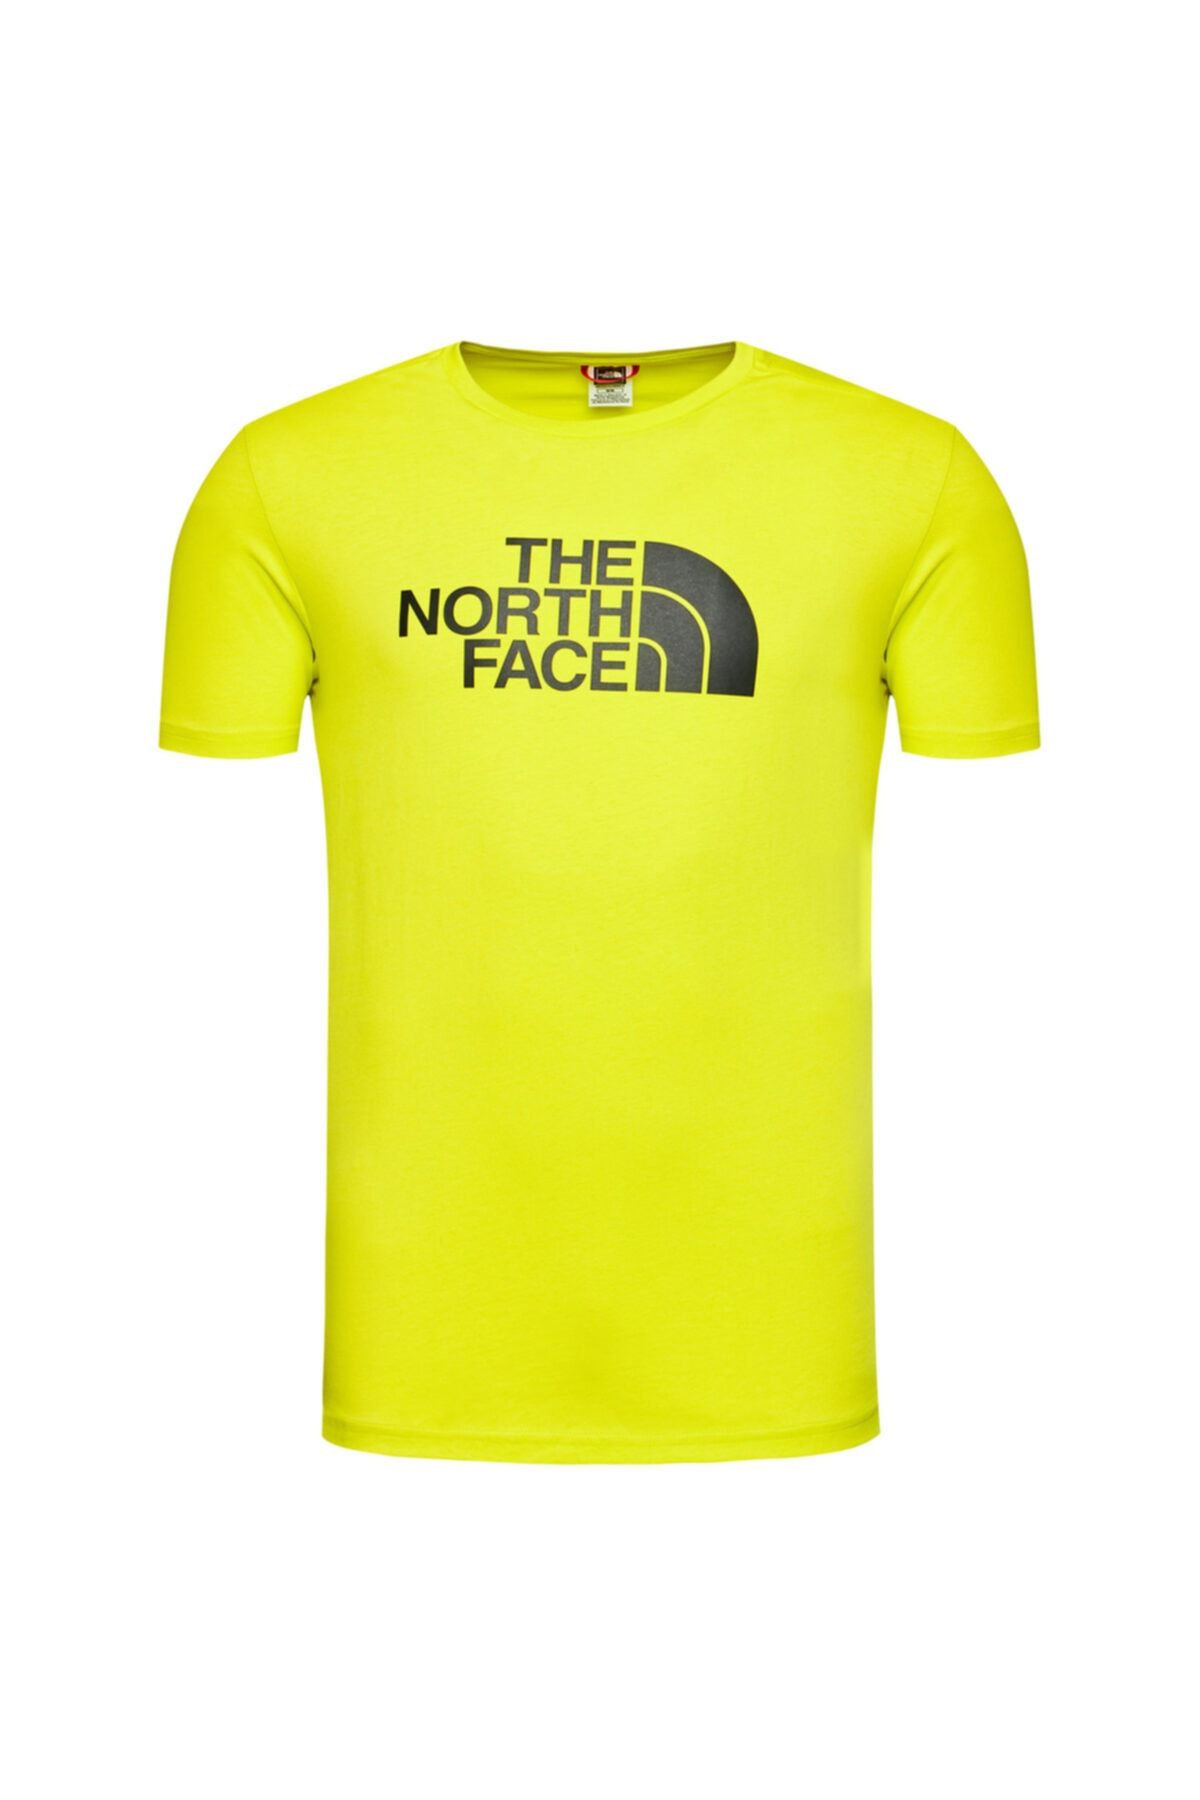 The North Face Erkek S/S EASY Tişört